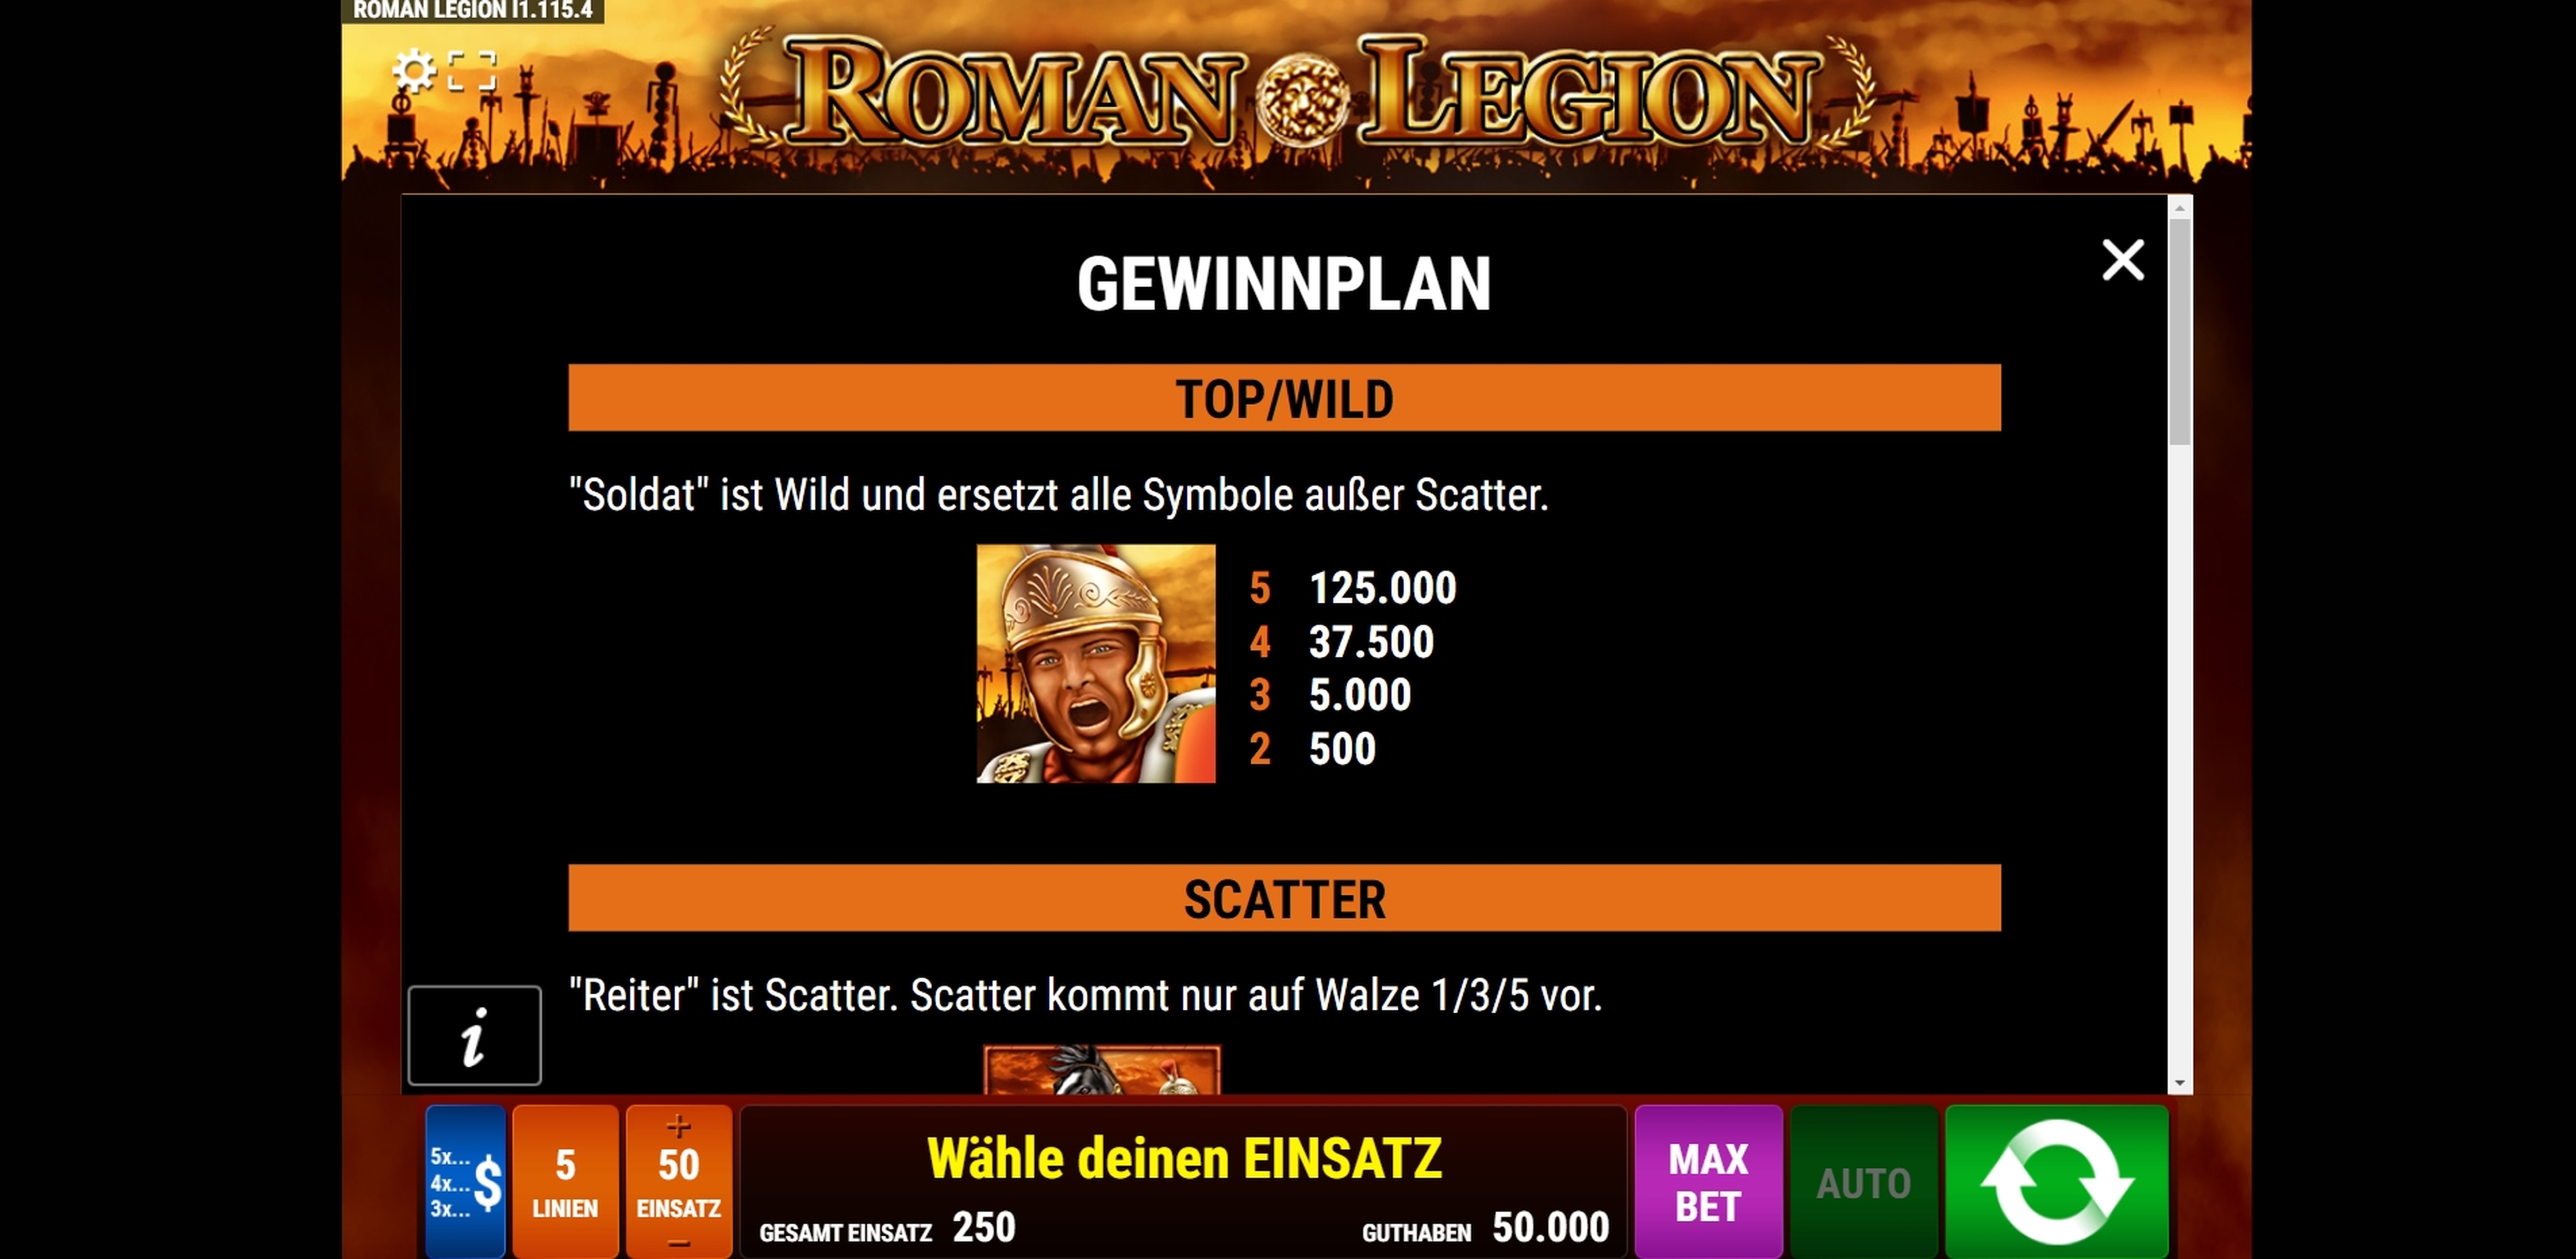 Info of Roman Legion Slot Game by Gamomat